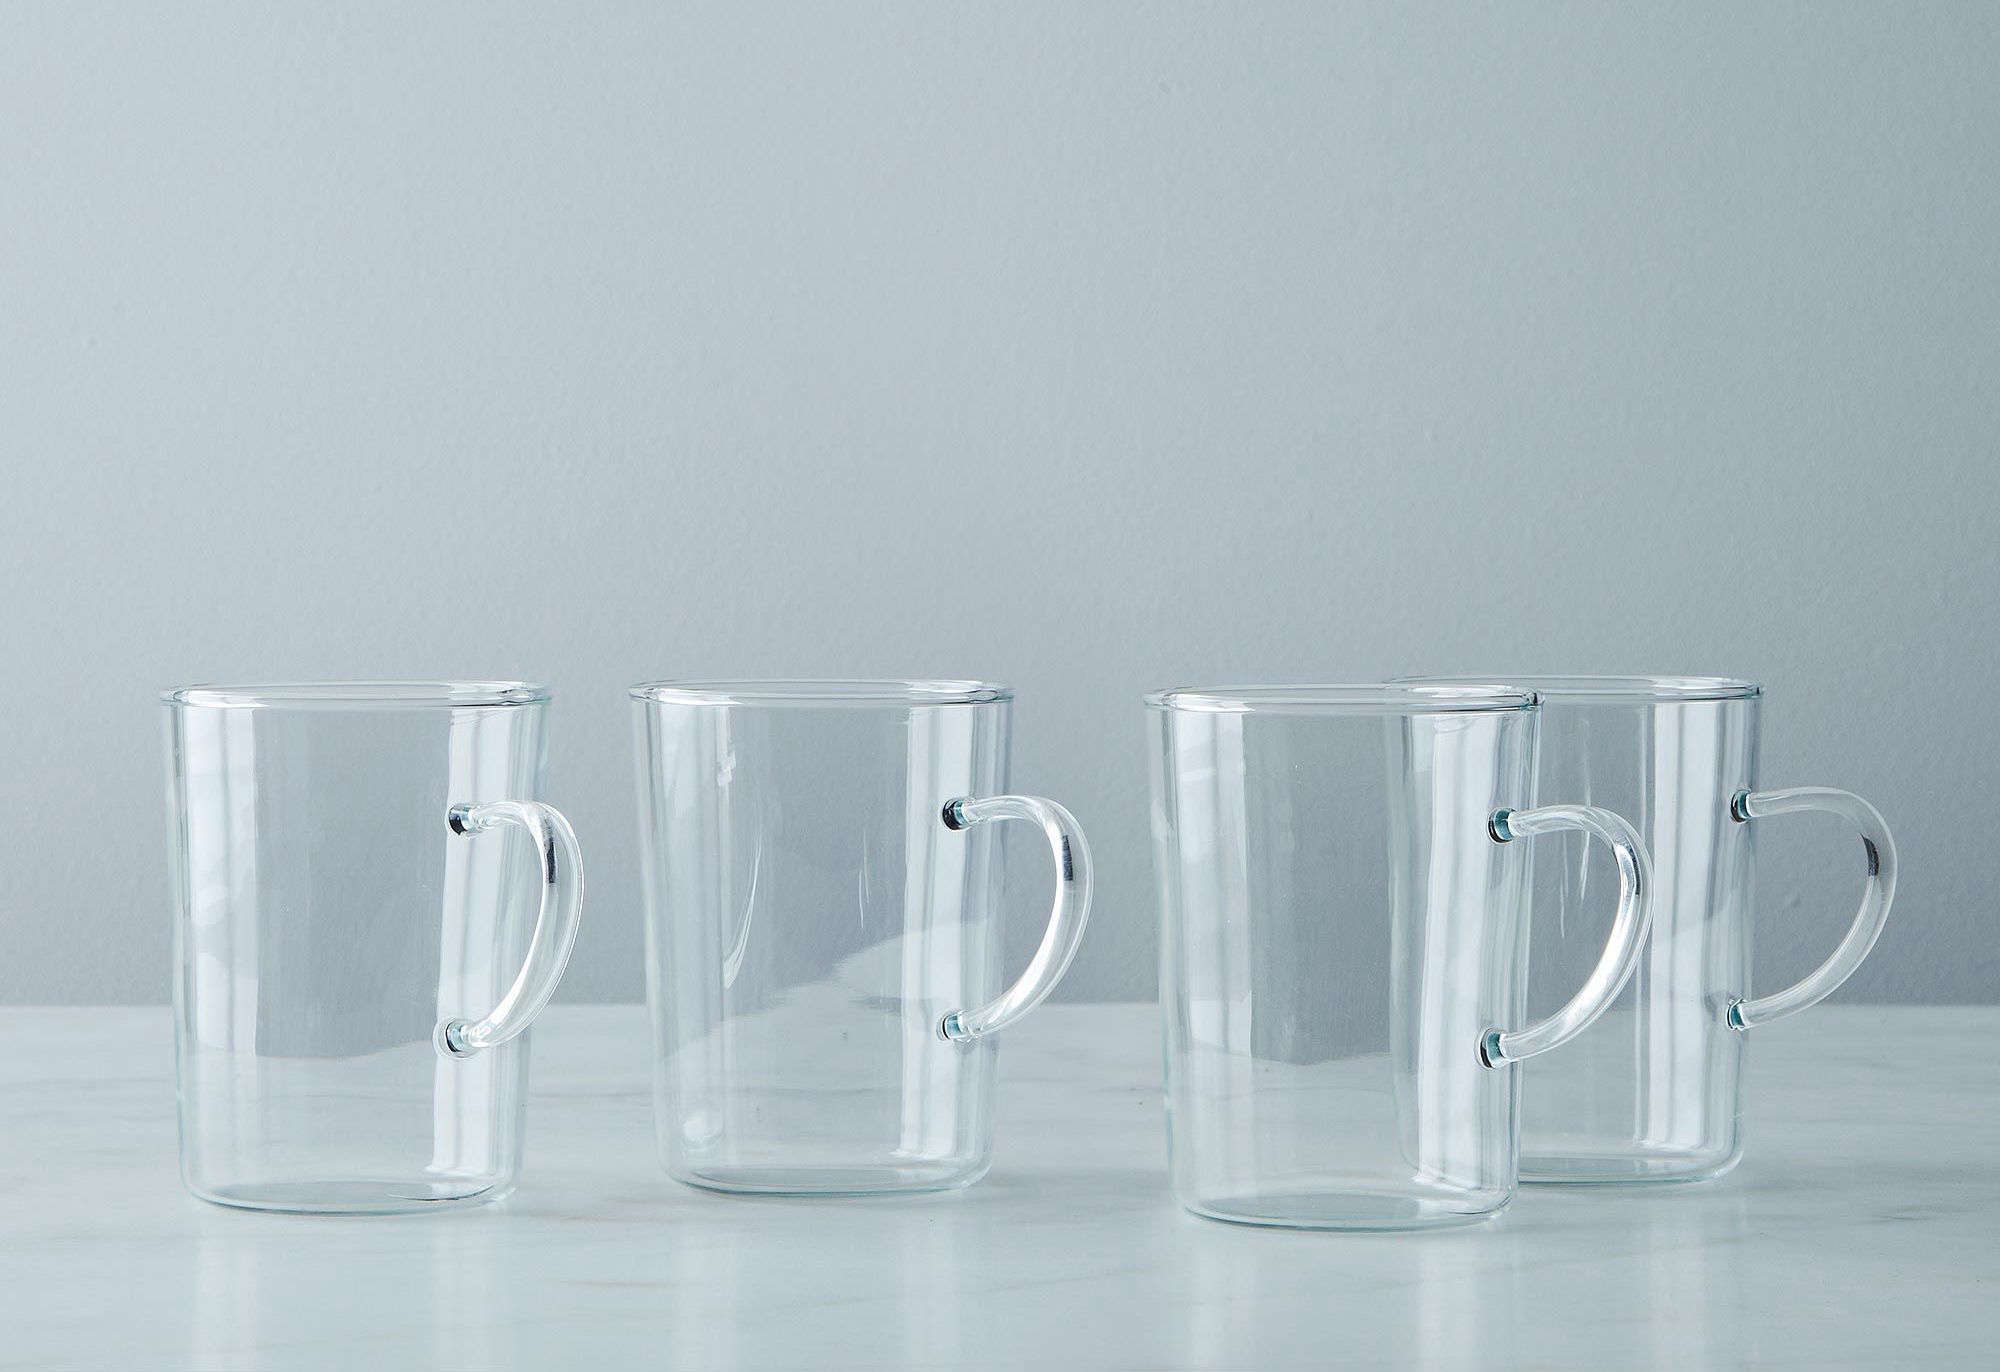 https://www.remodelista.com/wp-content/uploads/2018/03/food-52-glass-teacups.jpg